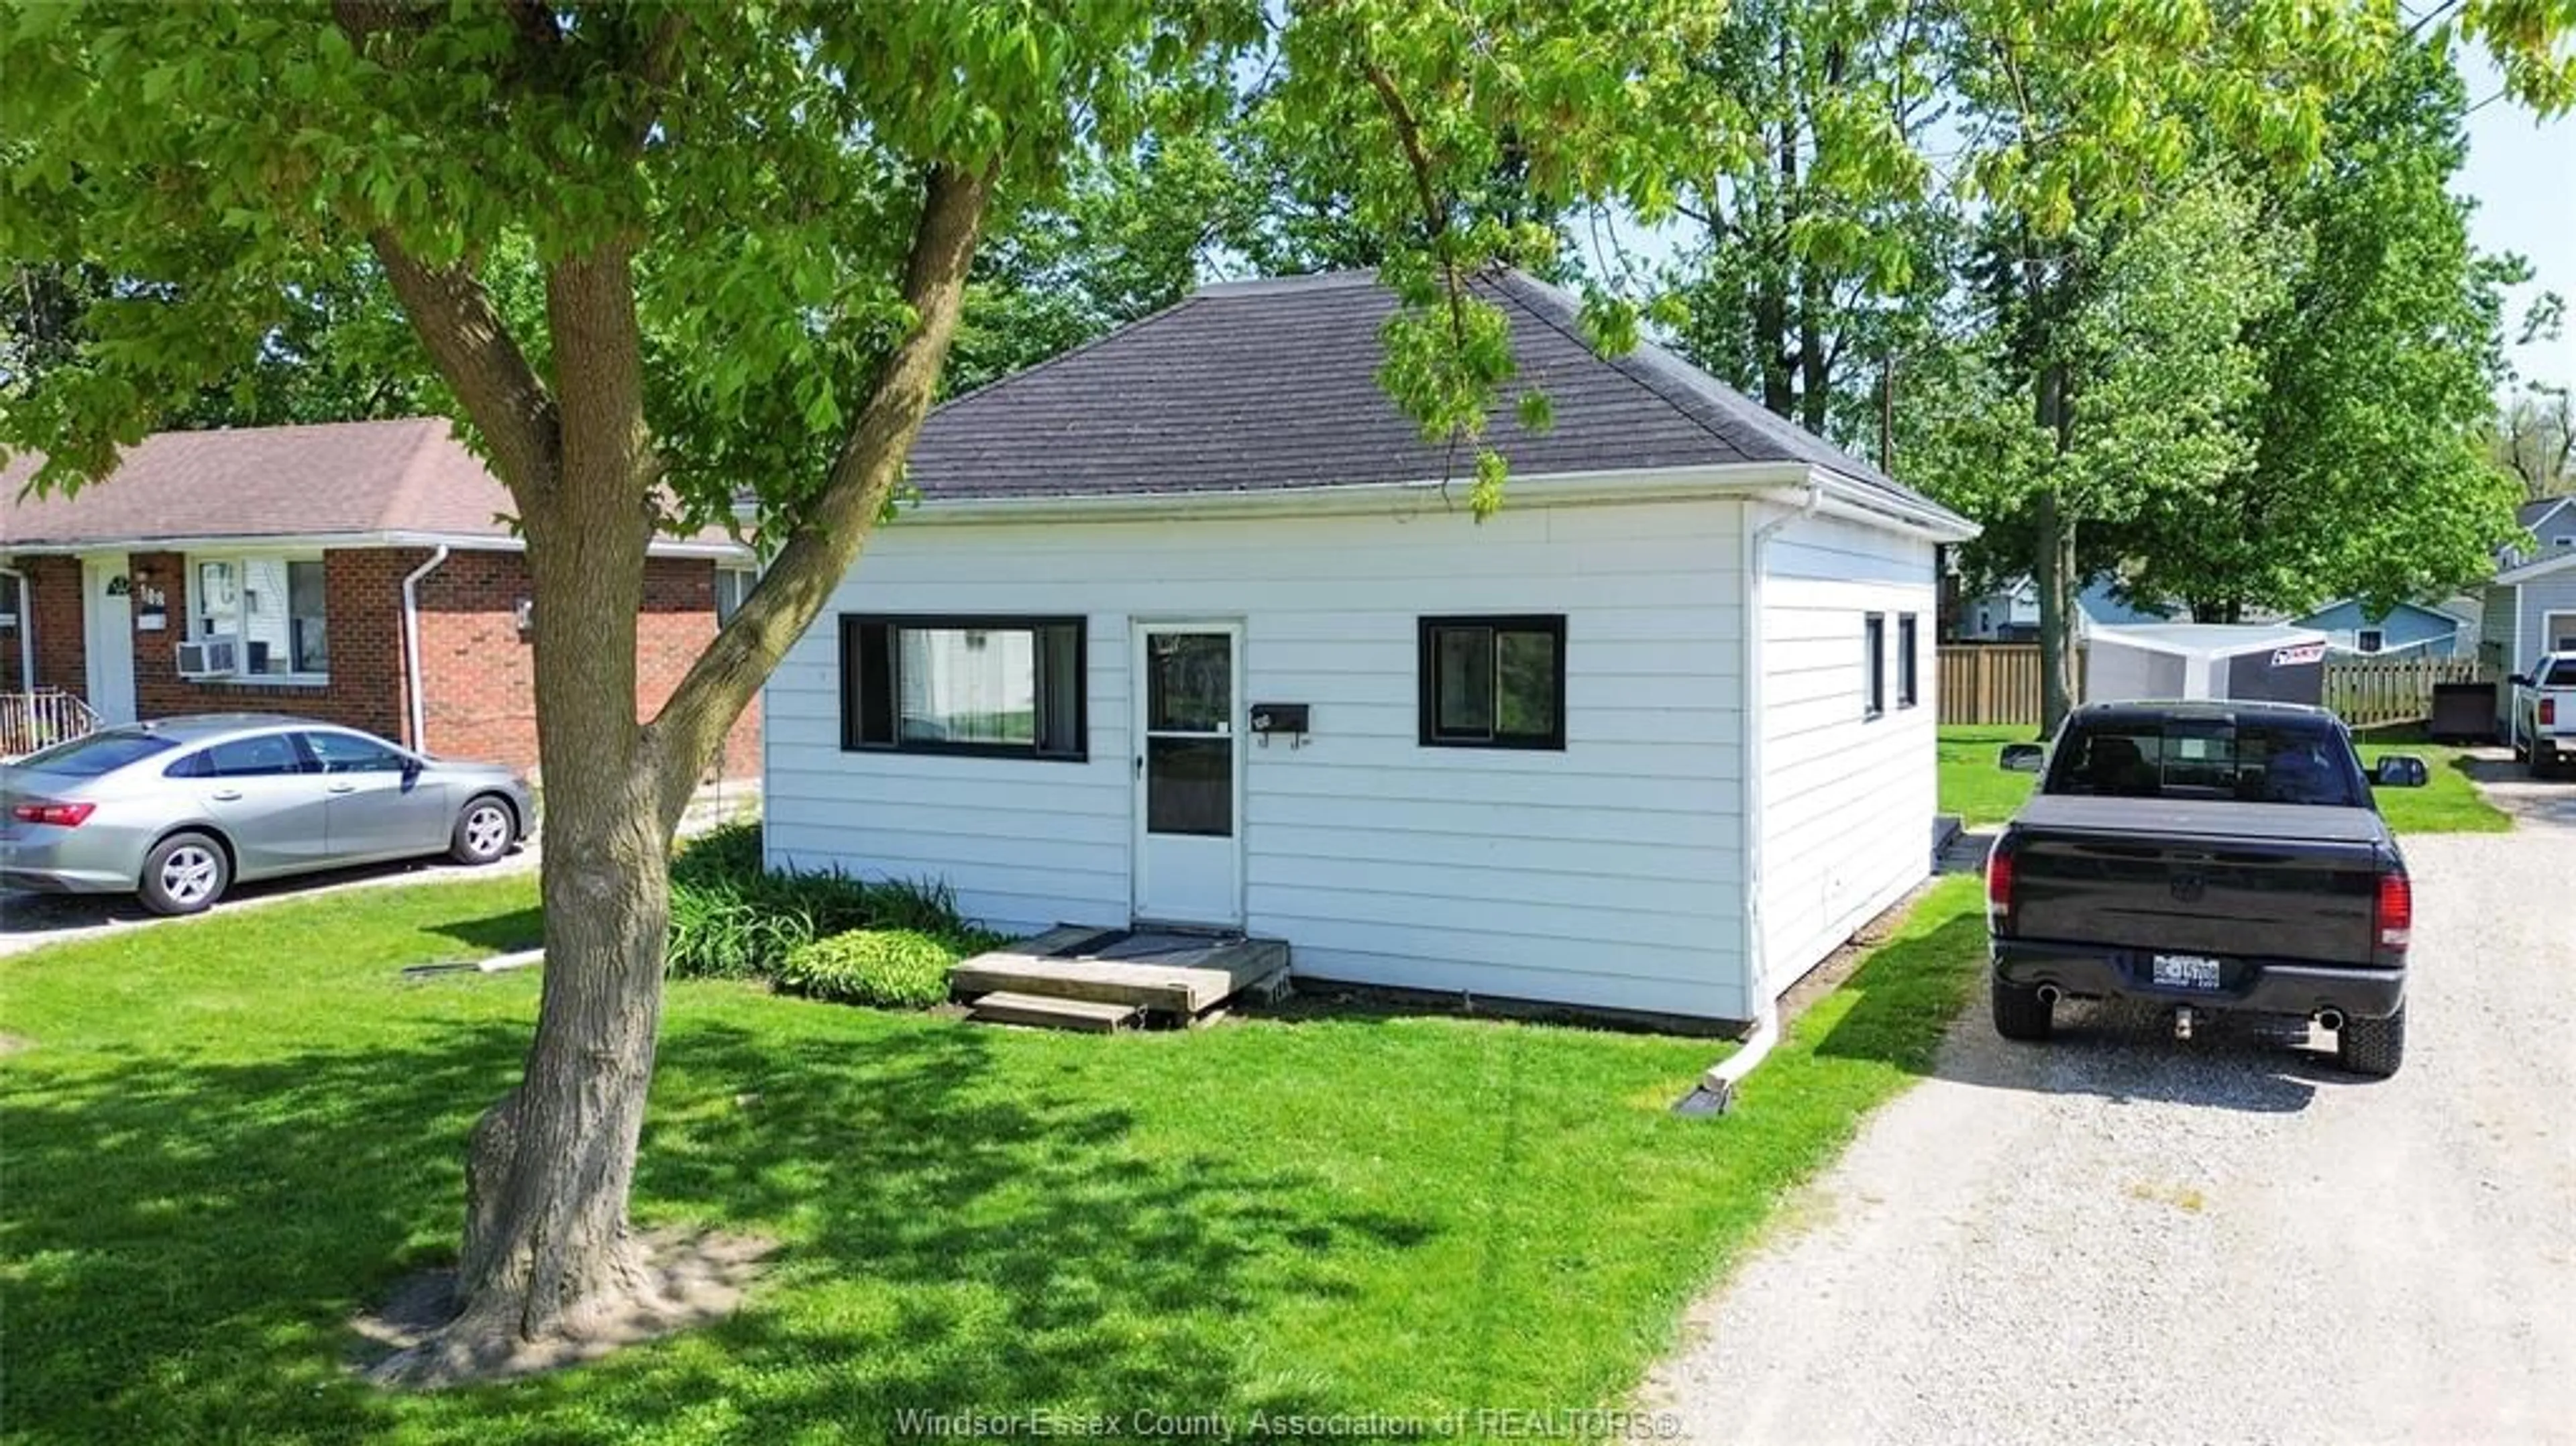 Cottage for 100 WILSON, Essex Ontario N8M 2M2